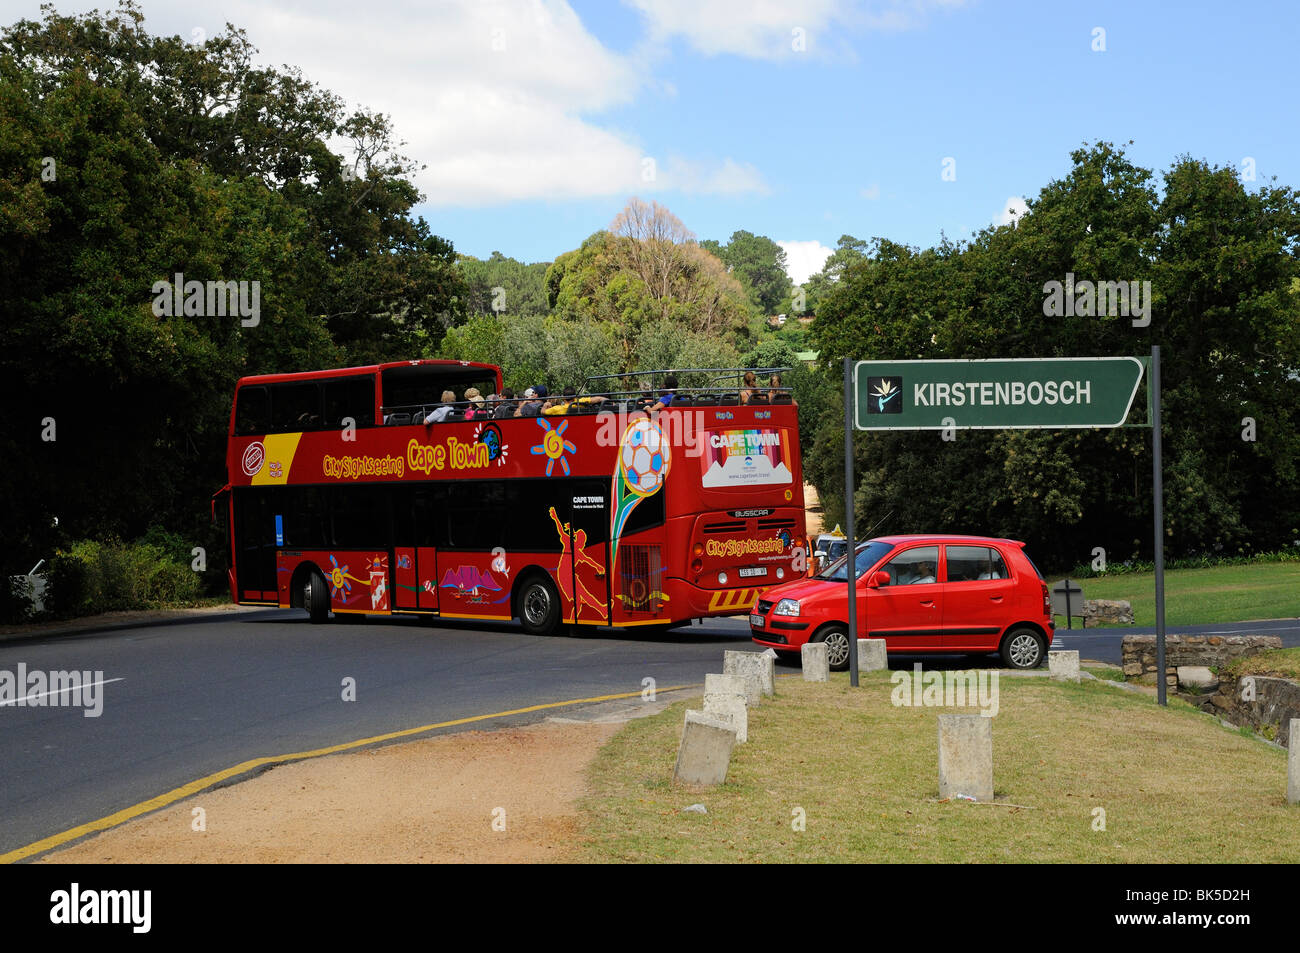 Hop on hop off tour bus at Kirstenbosch Botanic Gardens Cape Town South Africa Stock Photo